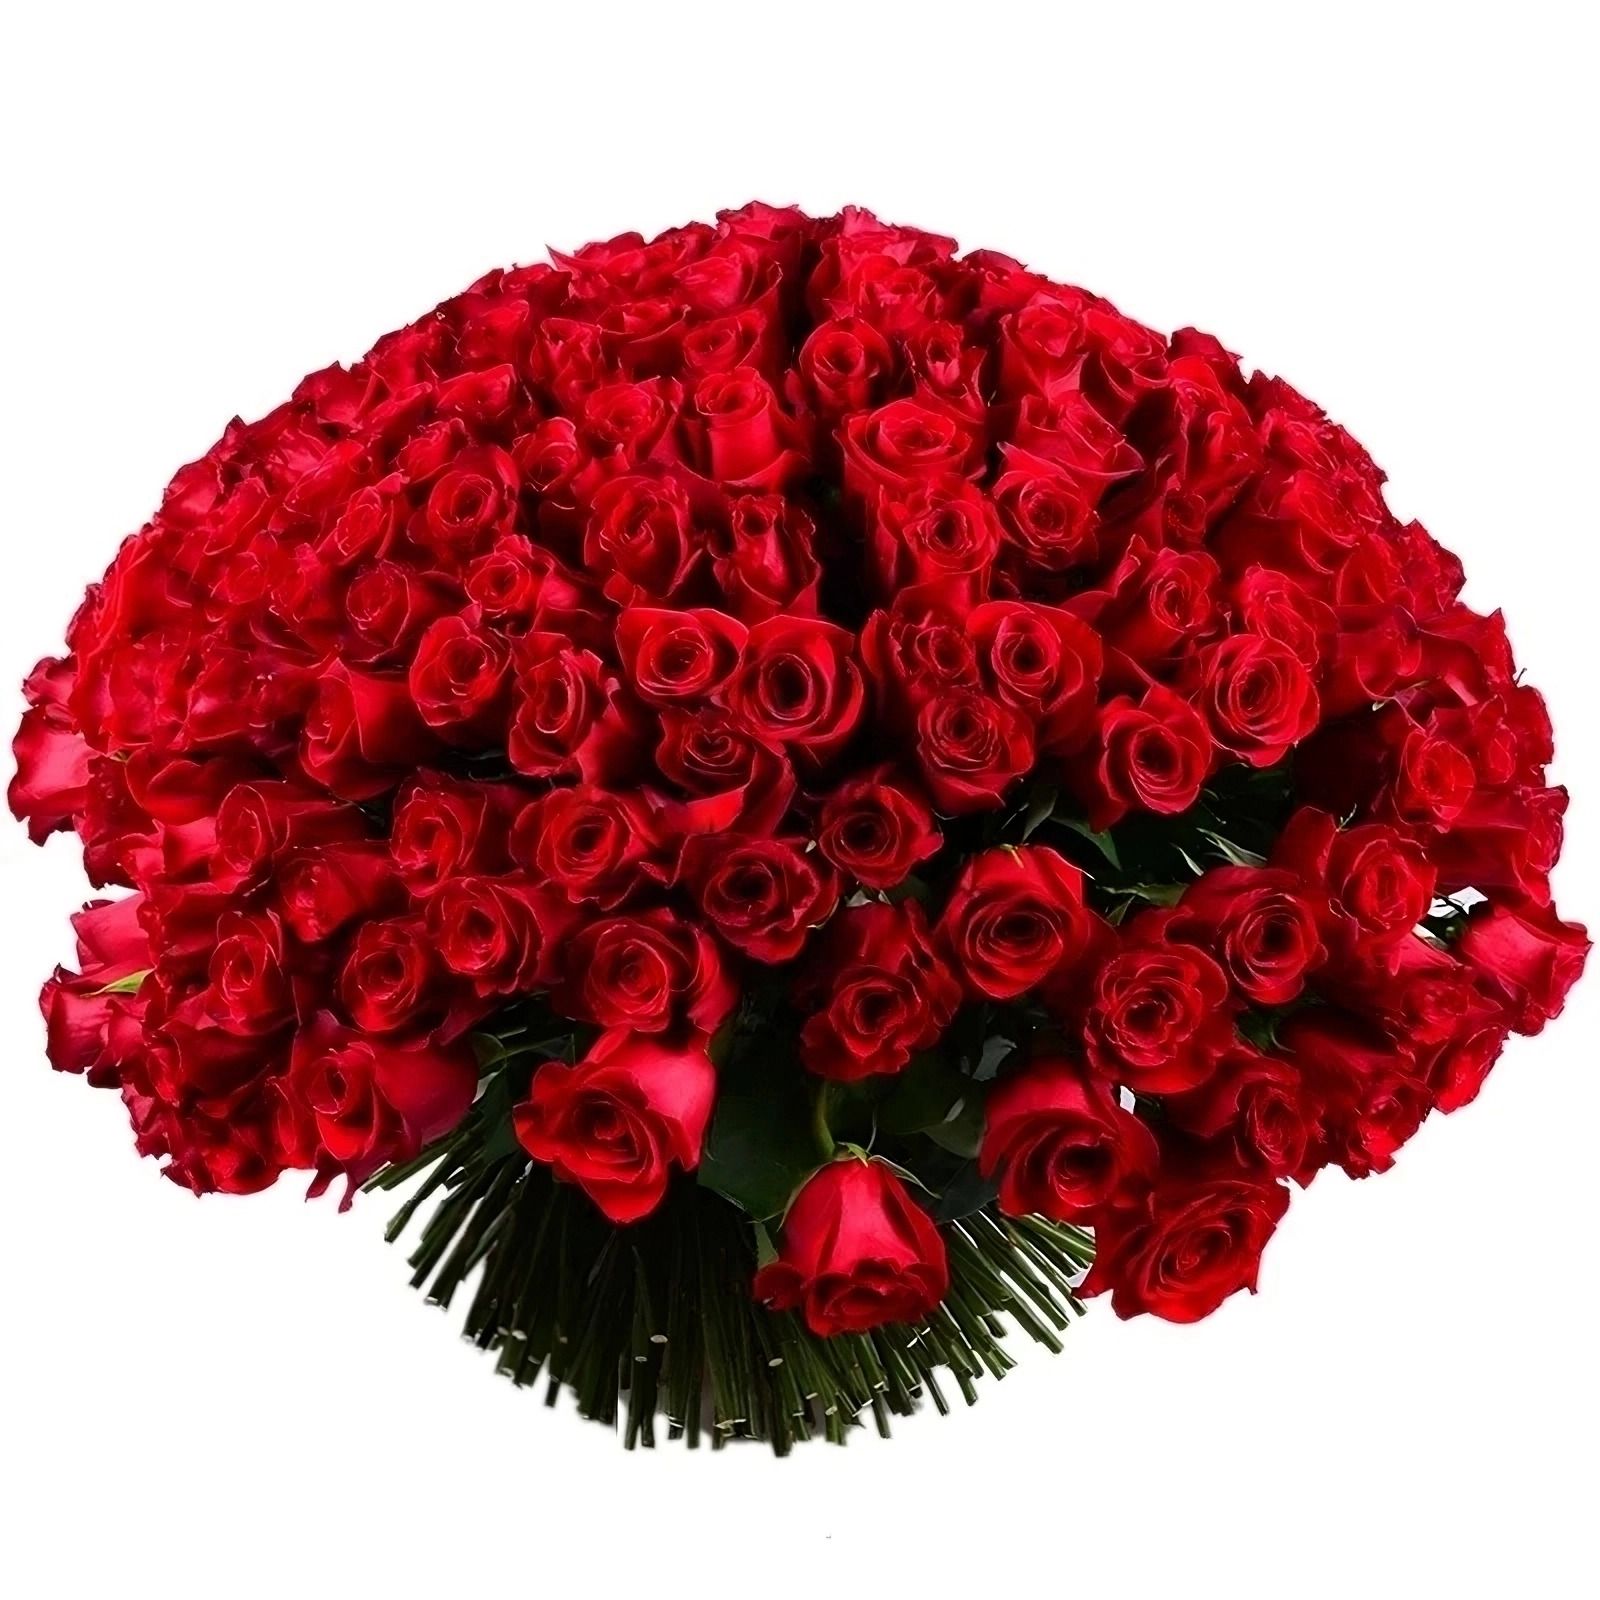 Huge bouquet of roses Kiev